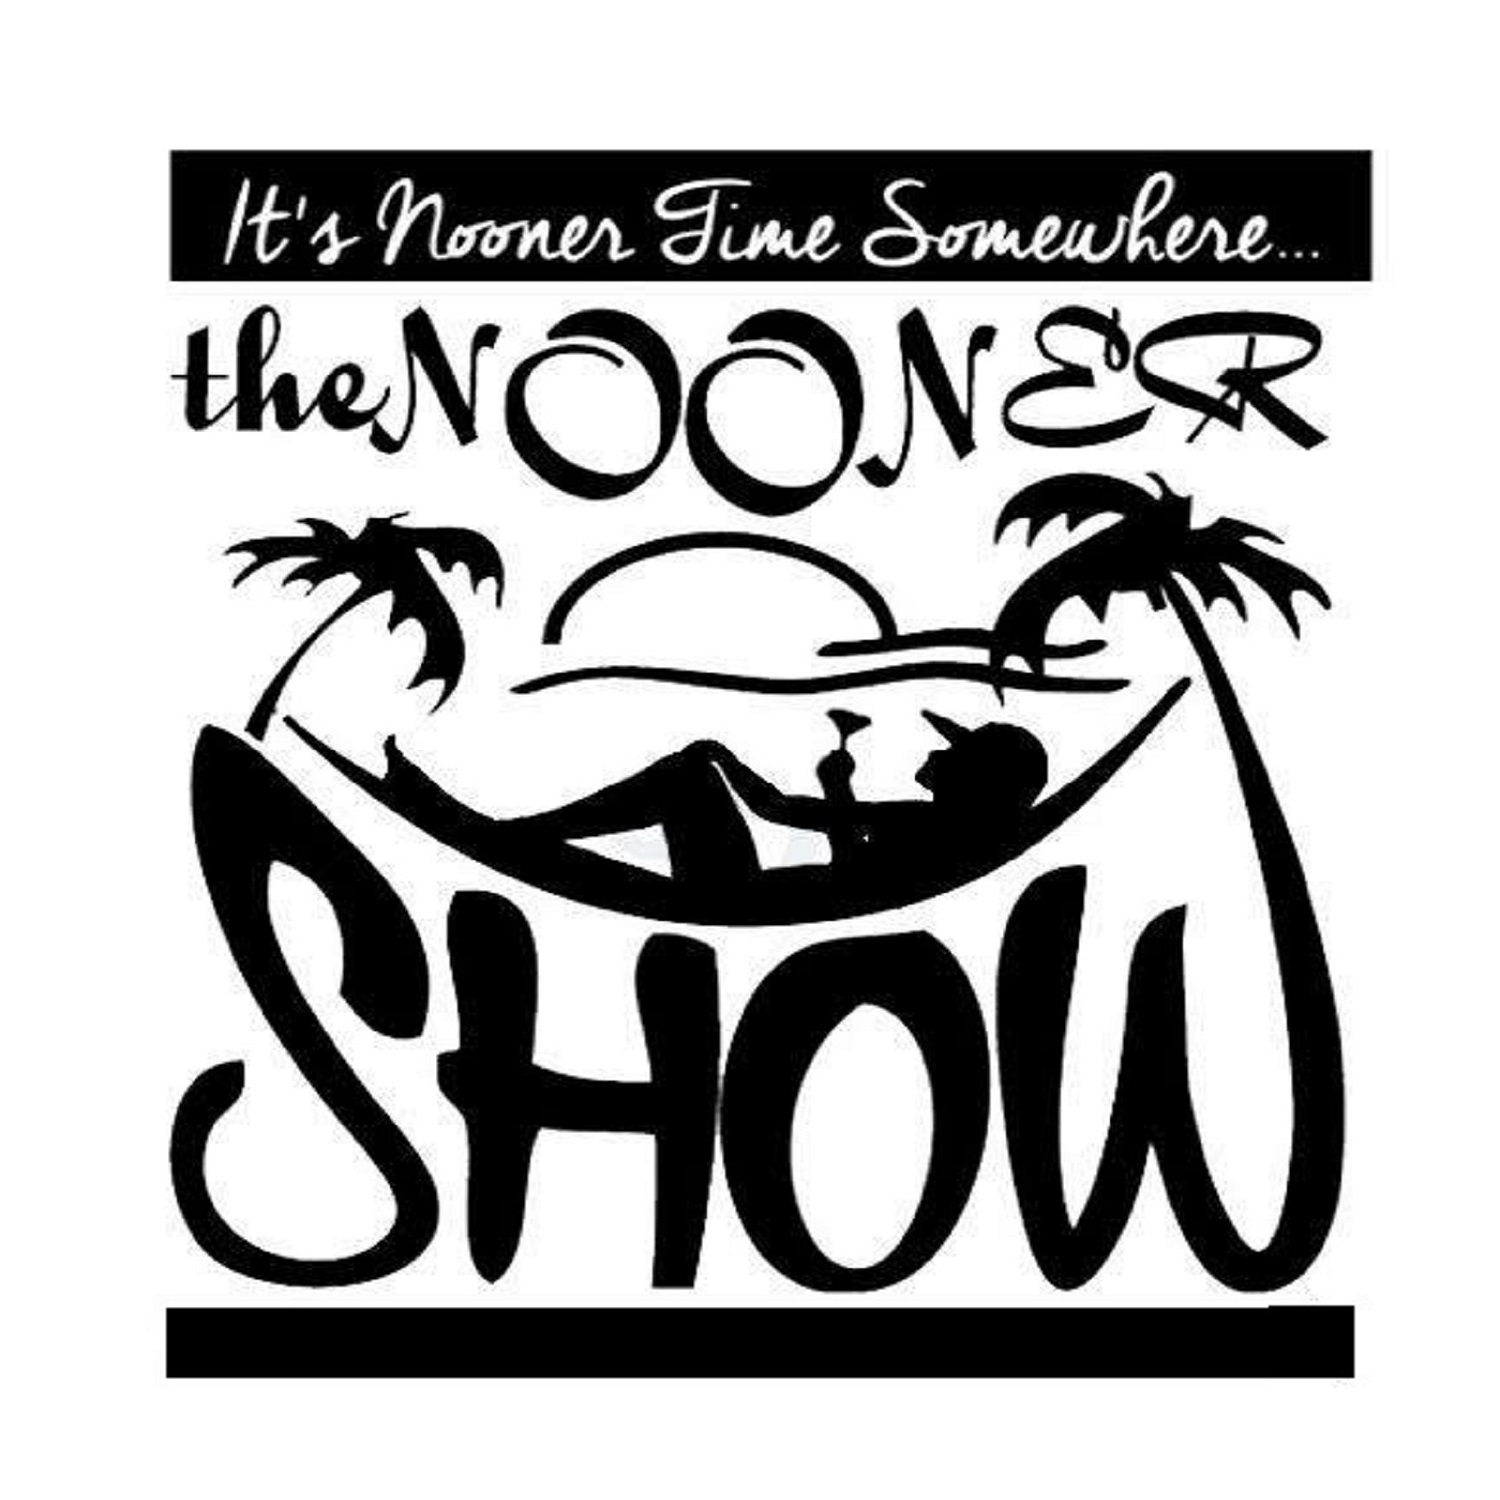 The Nooner Show – Episode 221